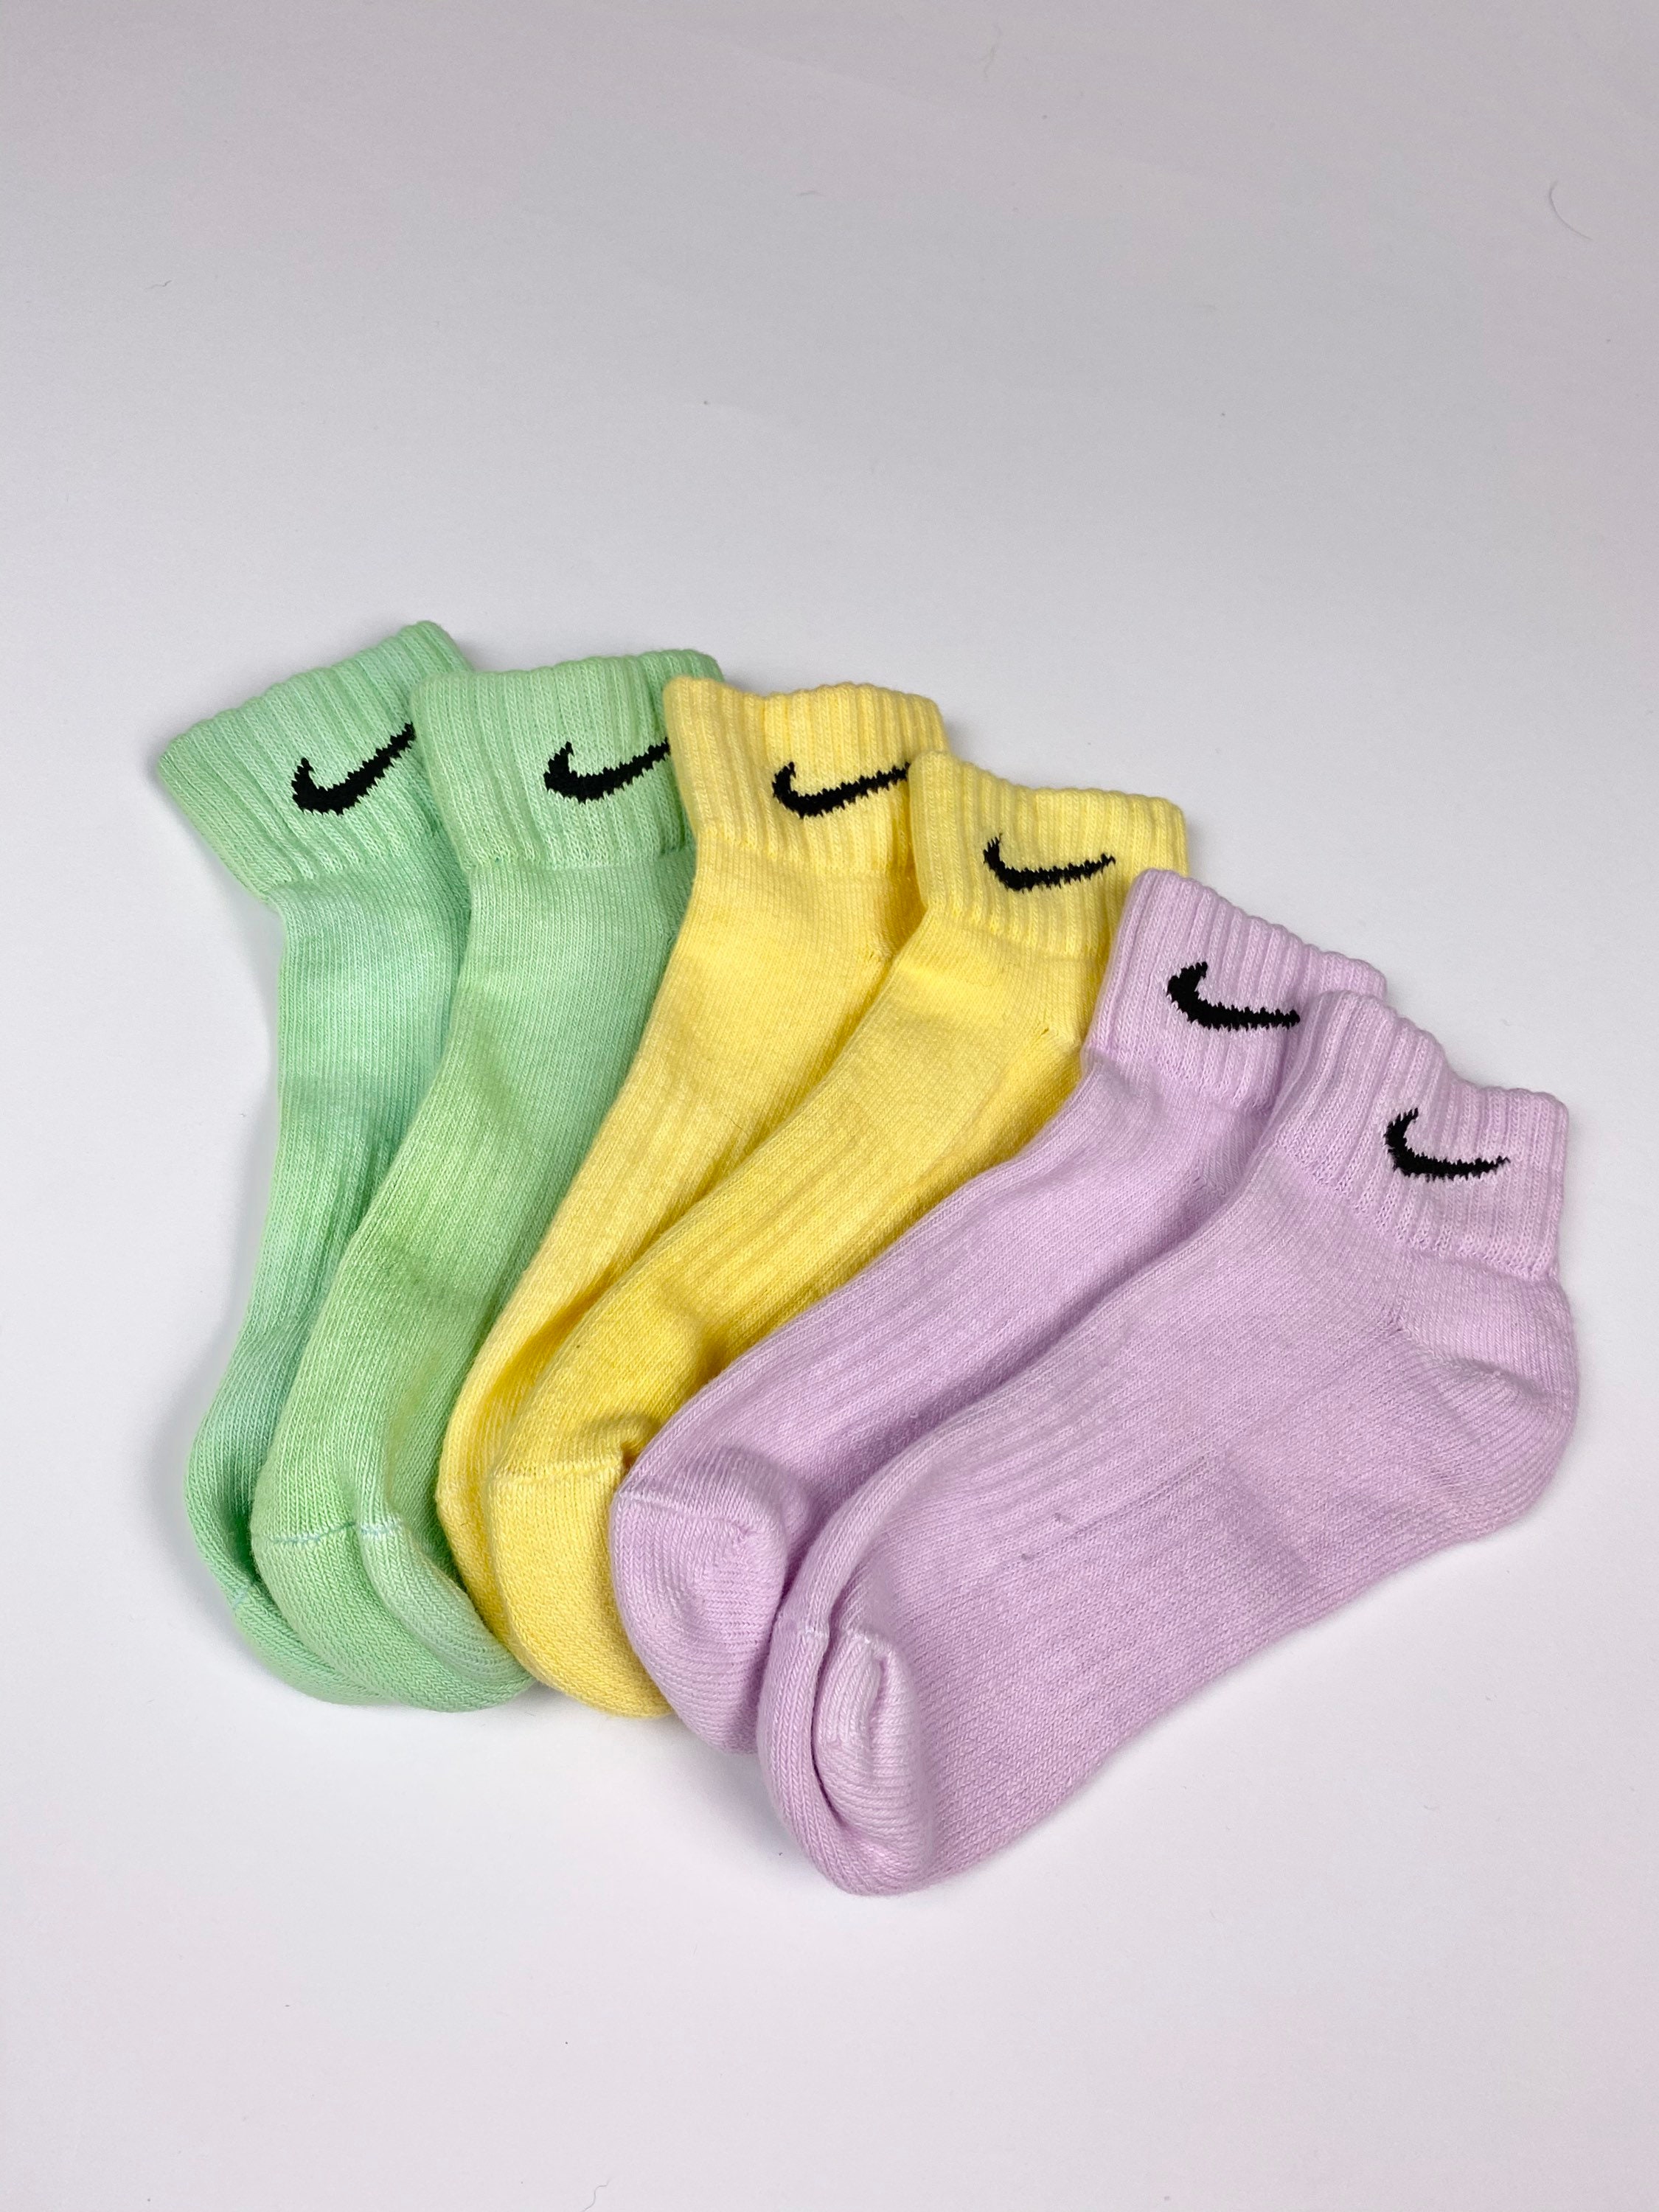 Nike Socks Colorful Pastel Colors 3 